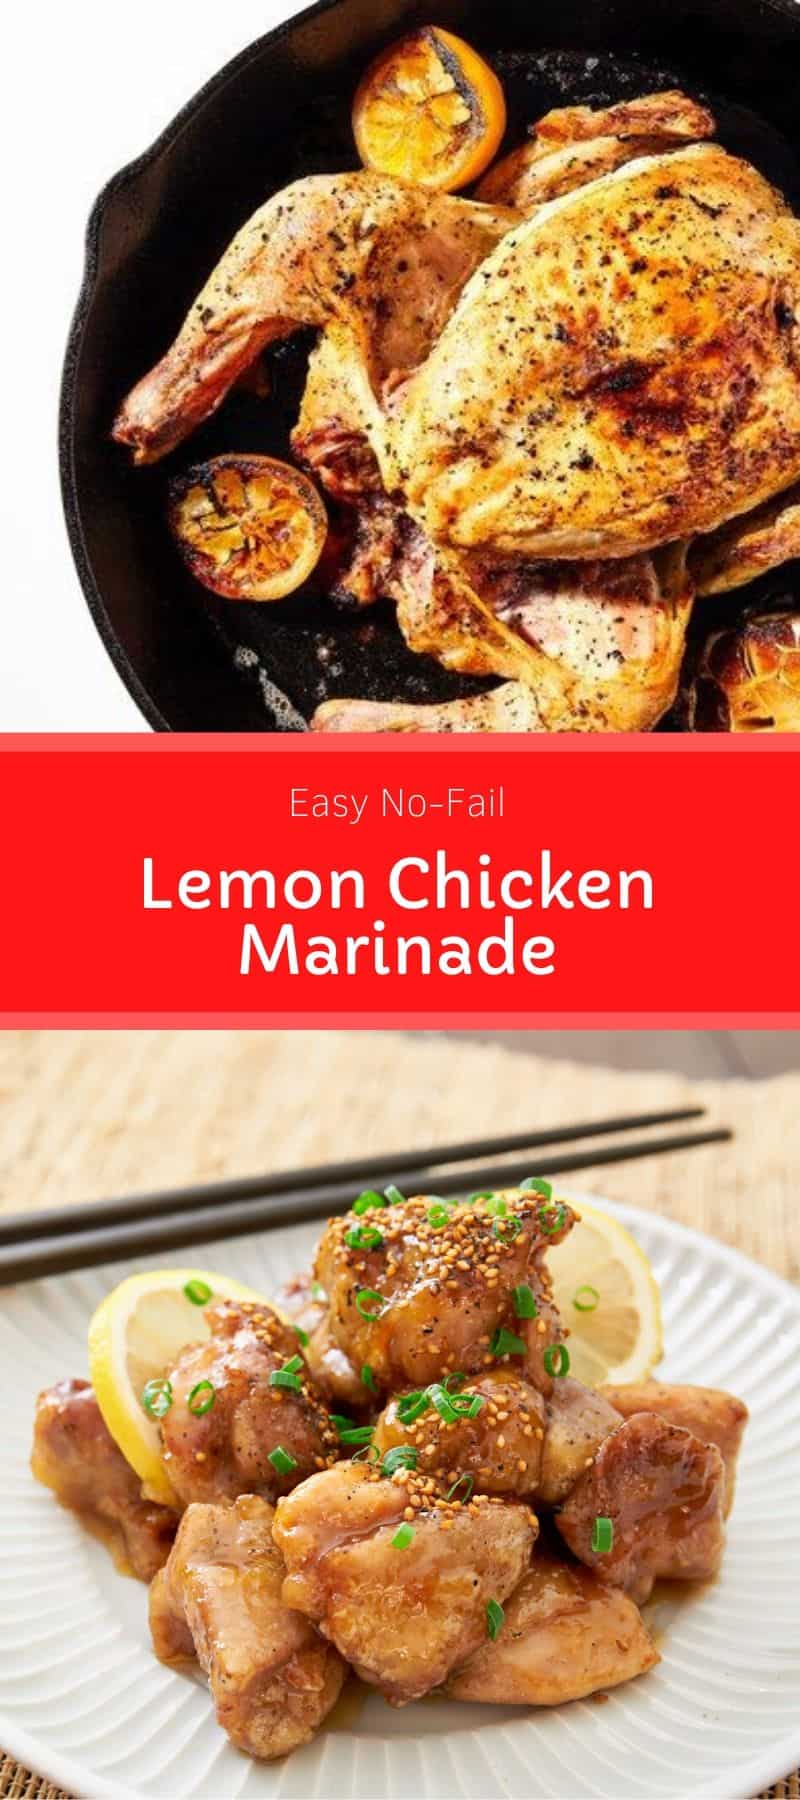 Easy No-Fail Lemon Chicken Marinade 3